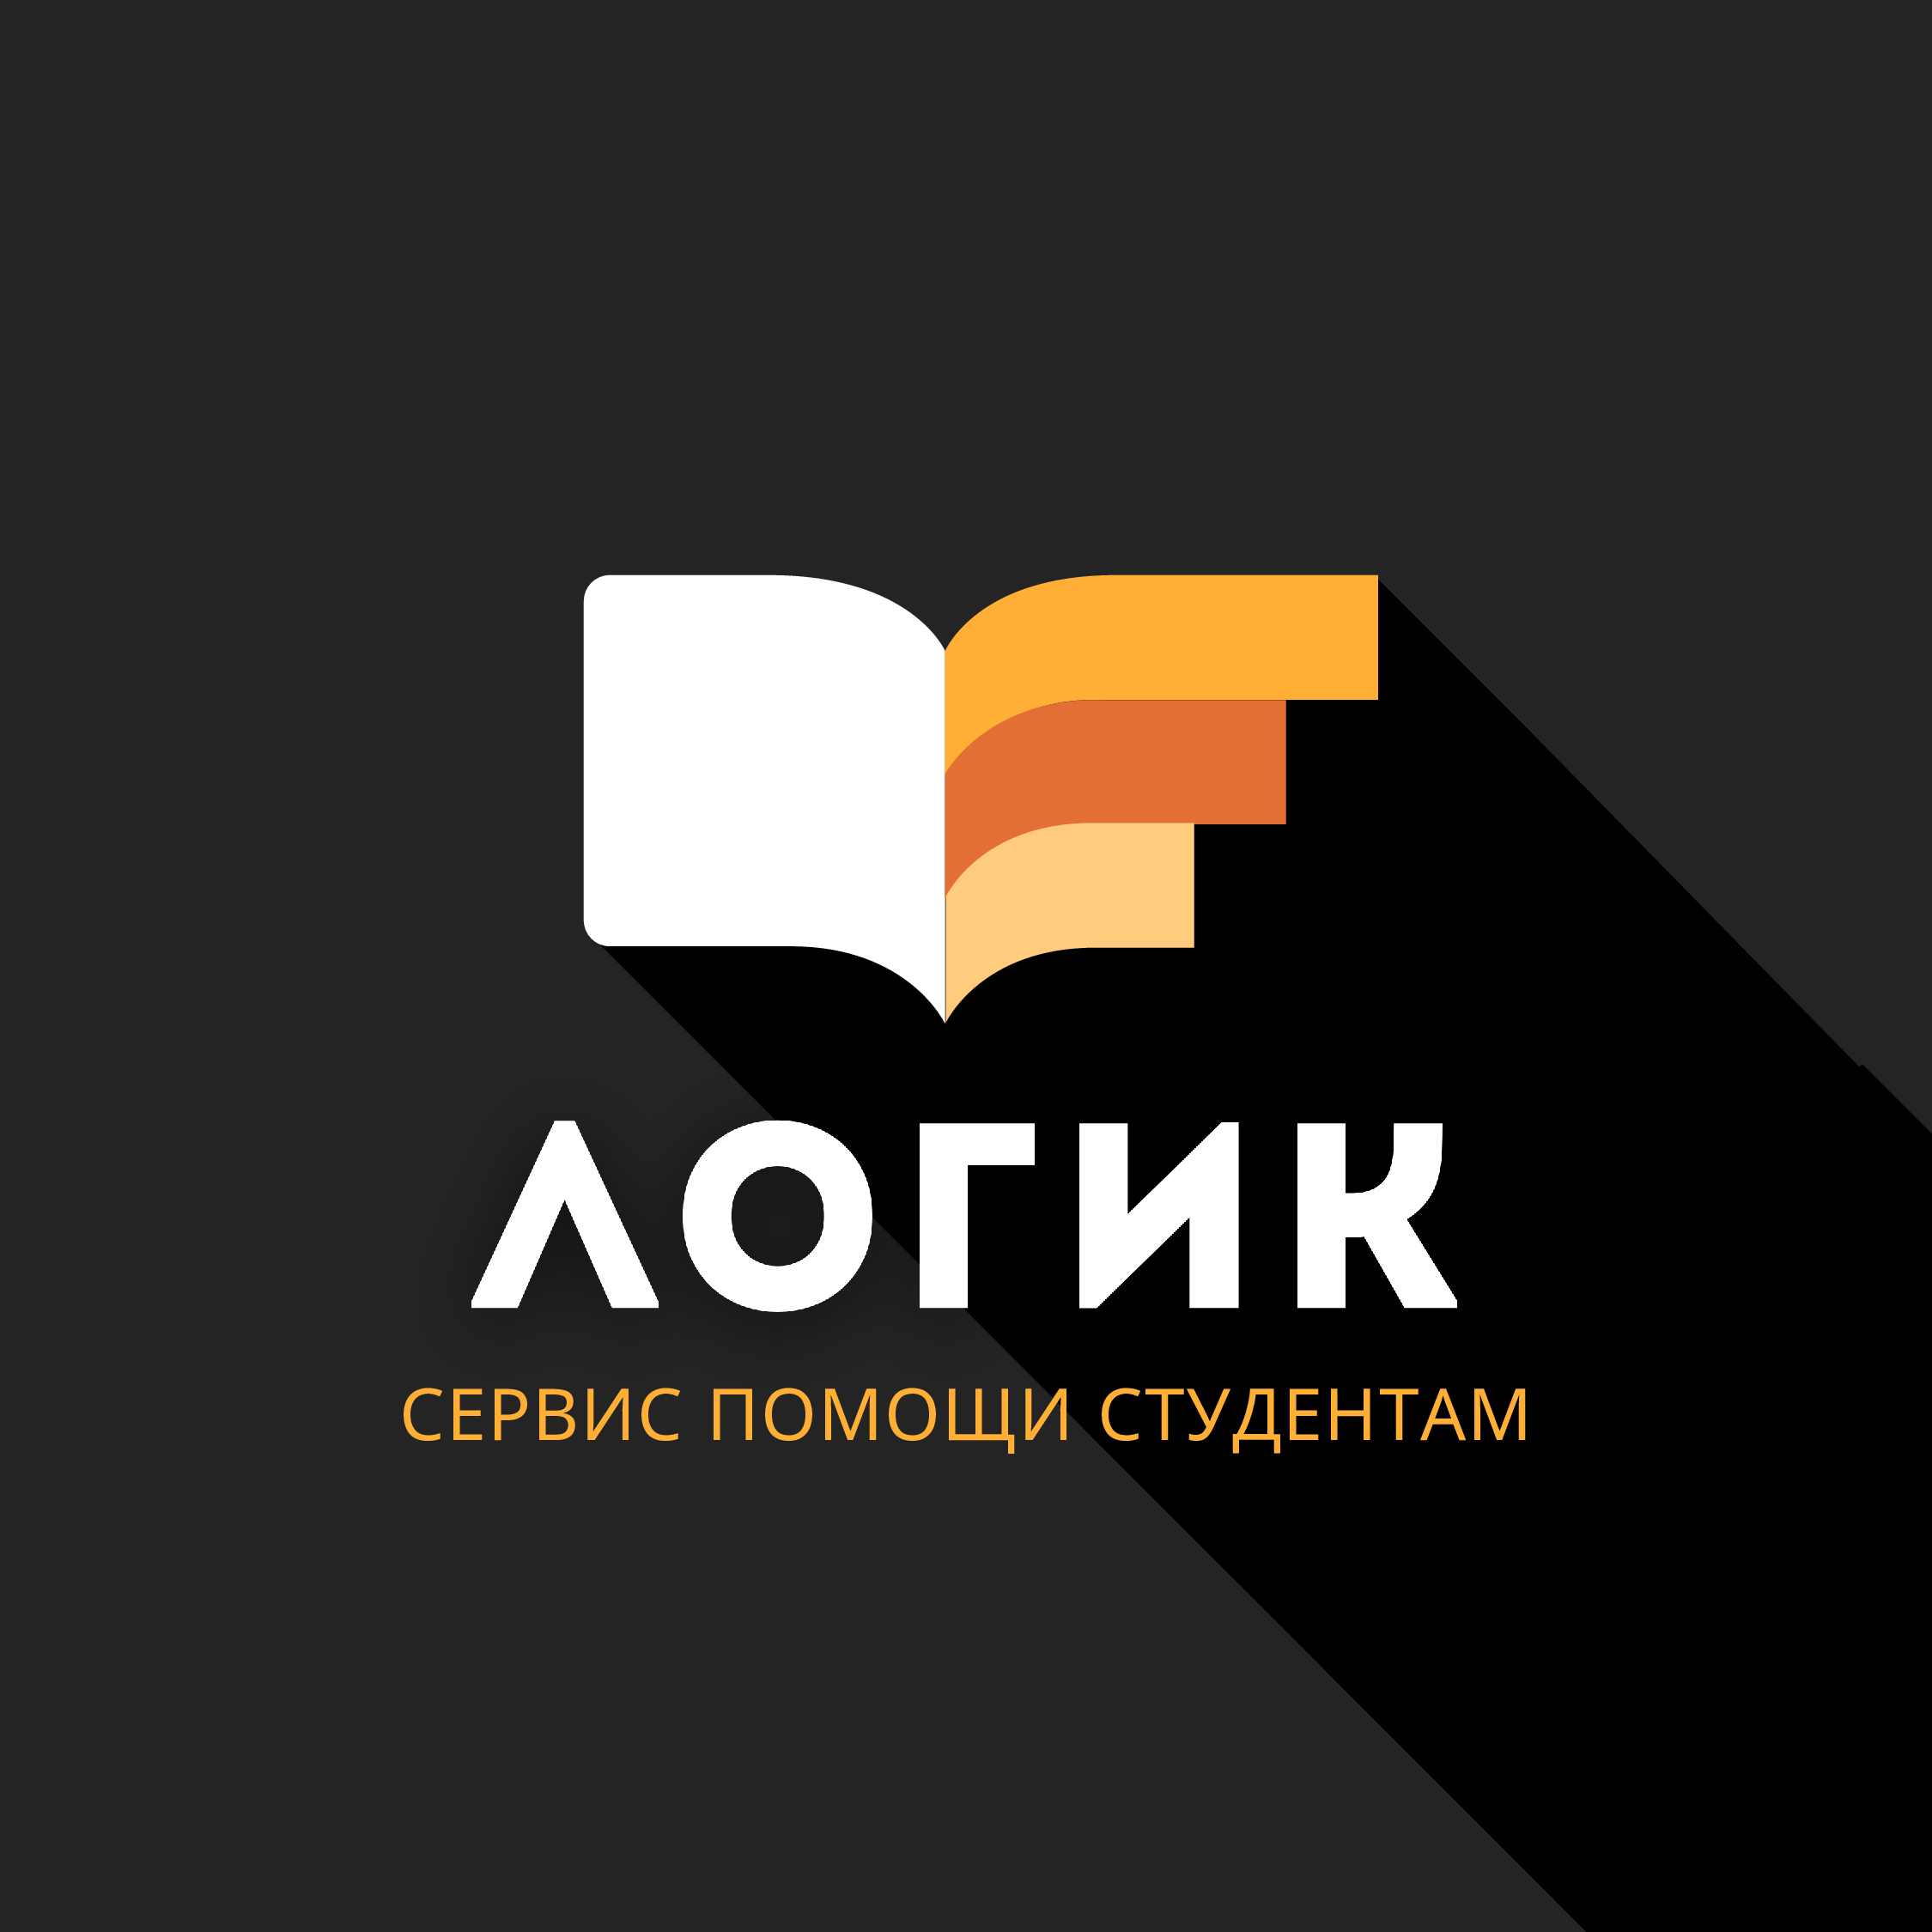 Логик — сервис помощи студентам и аспирантам в Архангельске